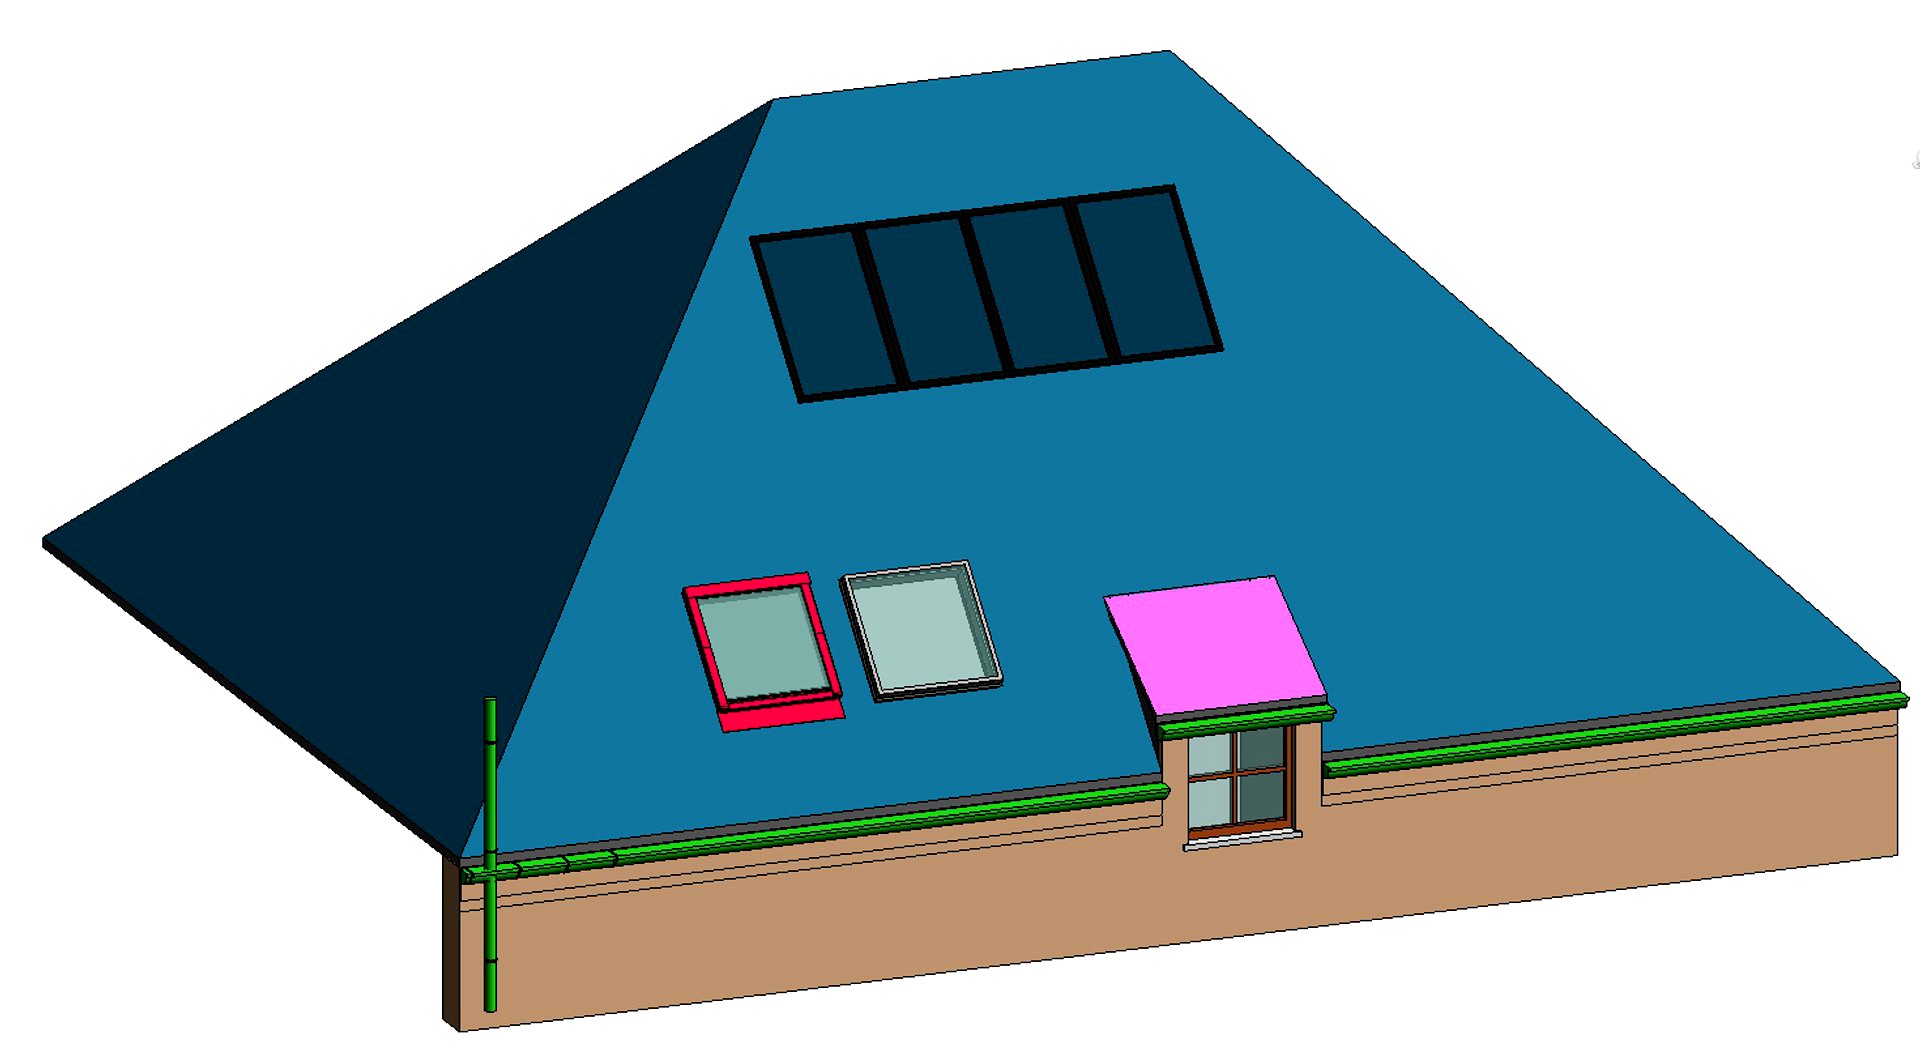 Roof elements - parametric v2019